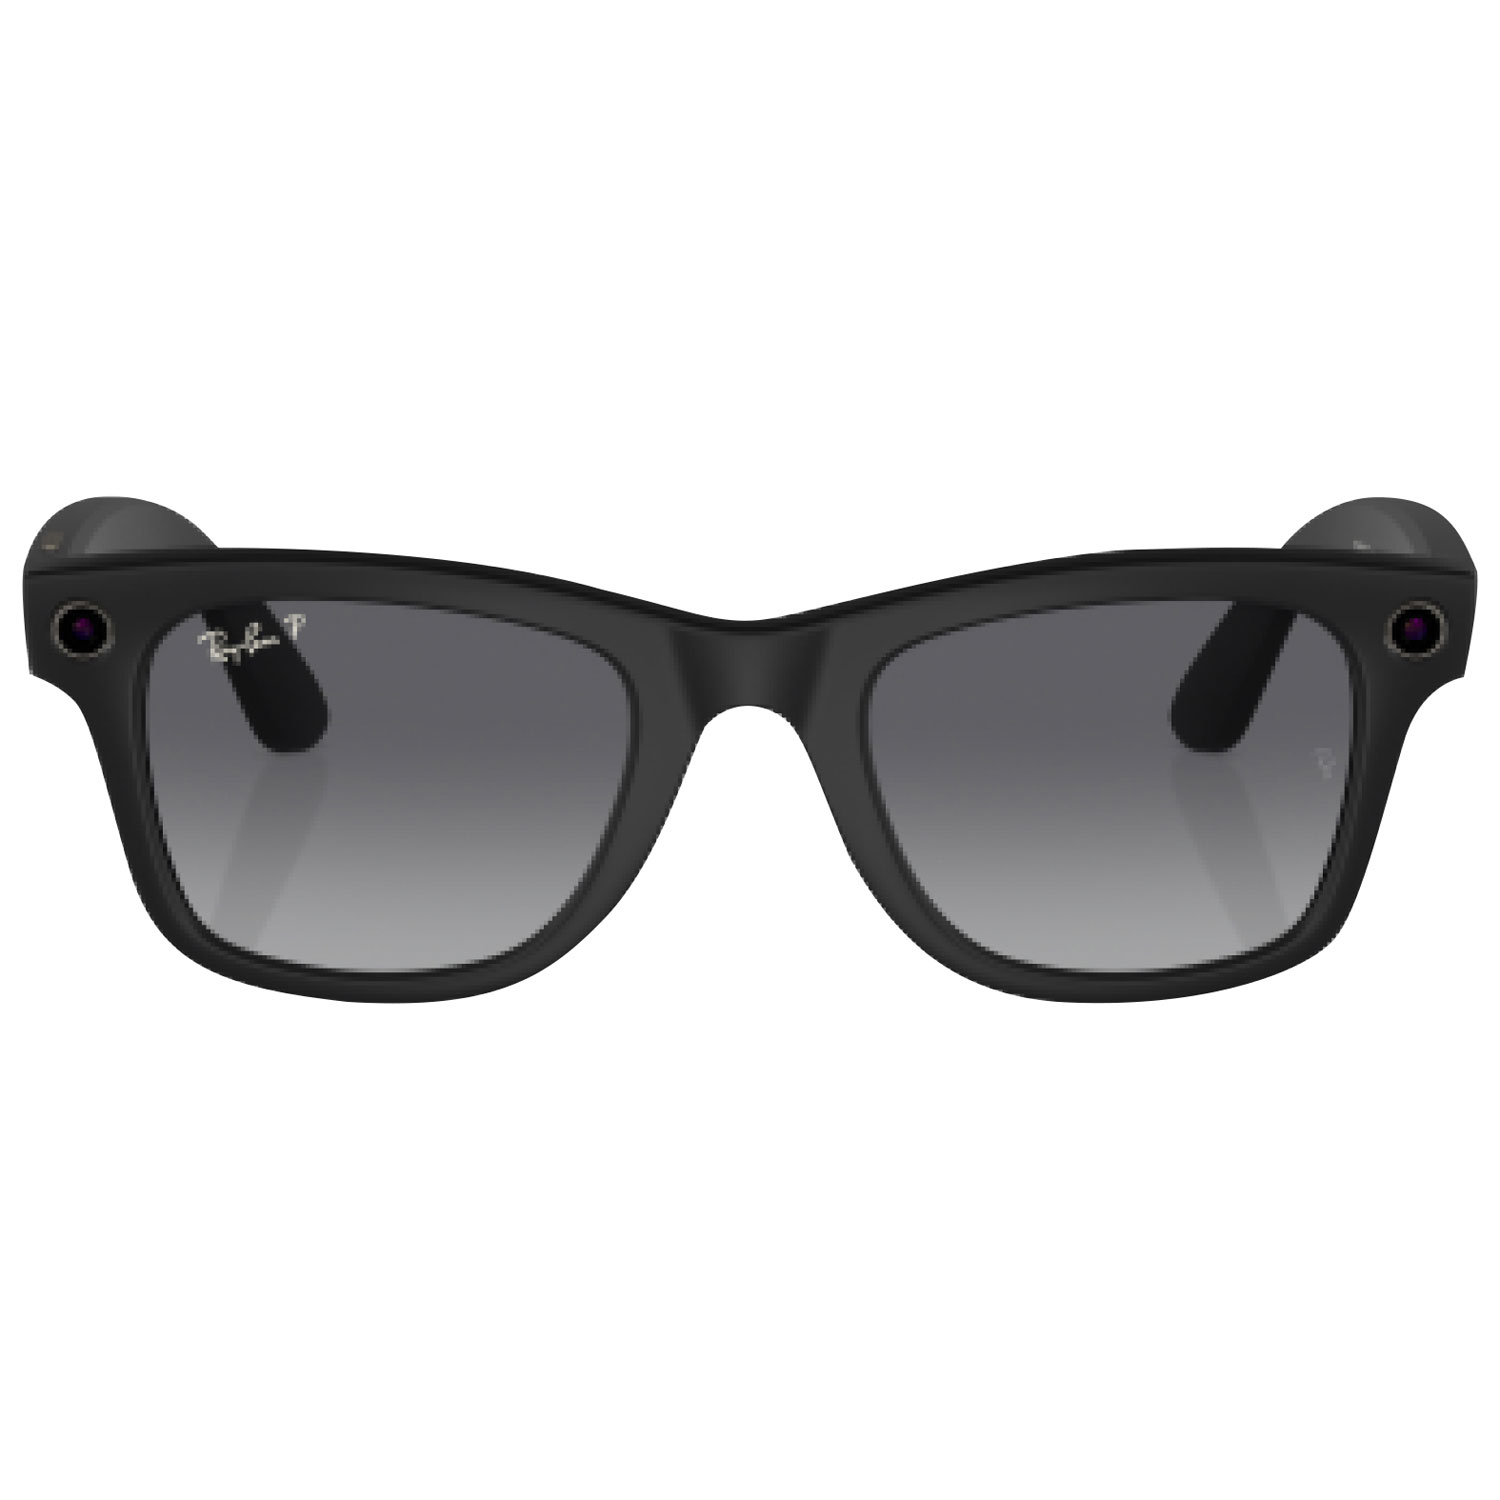 Ray-Ban | Meta Wayfarer Smart Glasses with Photo, Video & Audio - Matte Black/Polarized Gradient Graphite